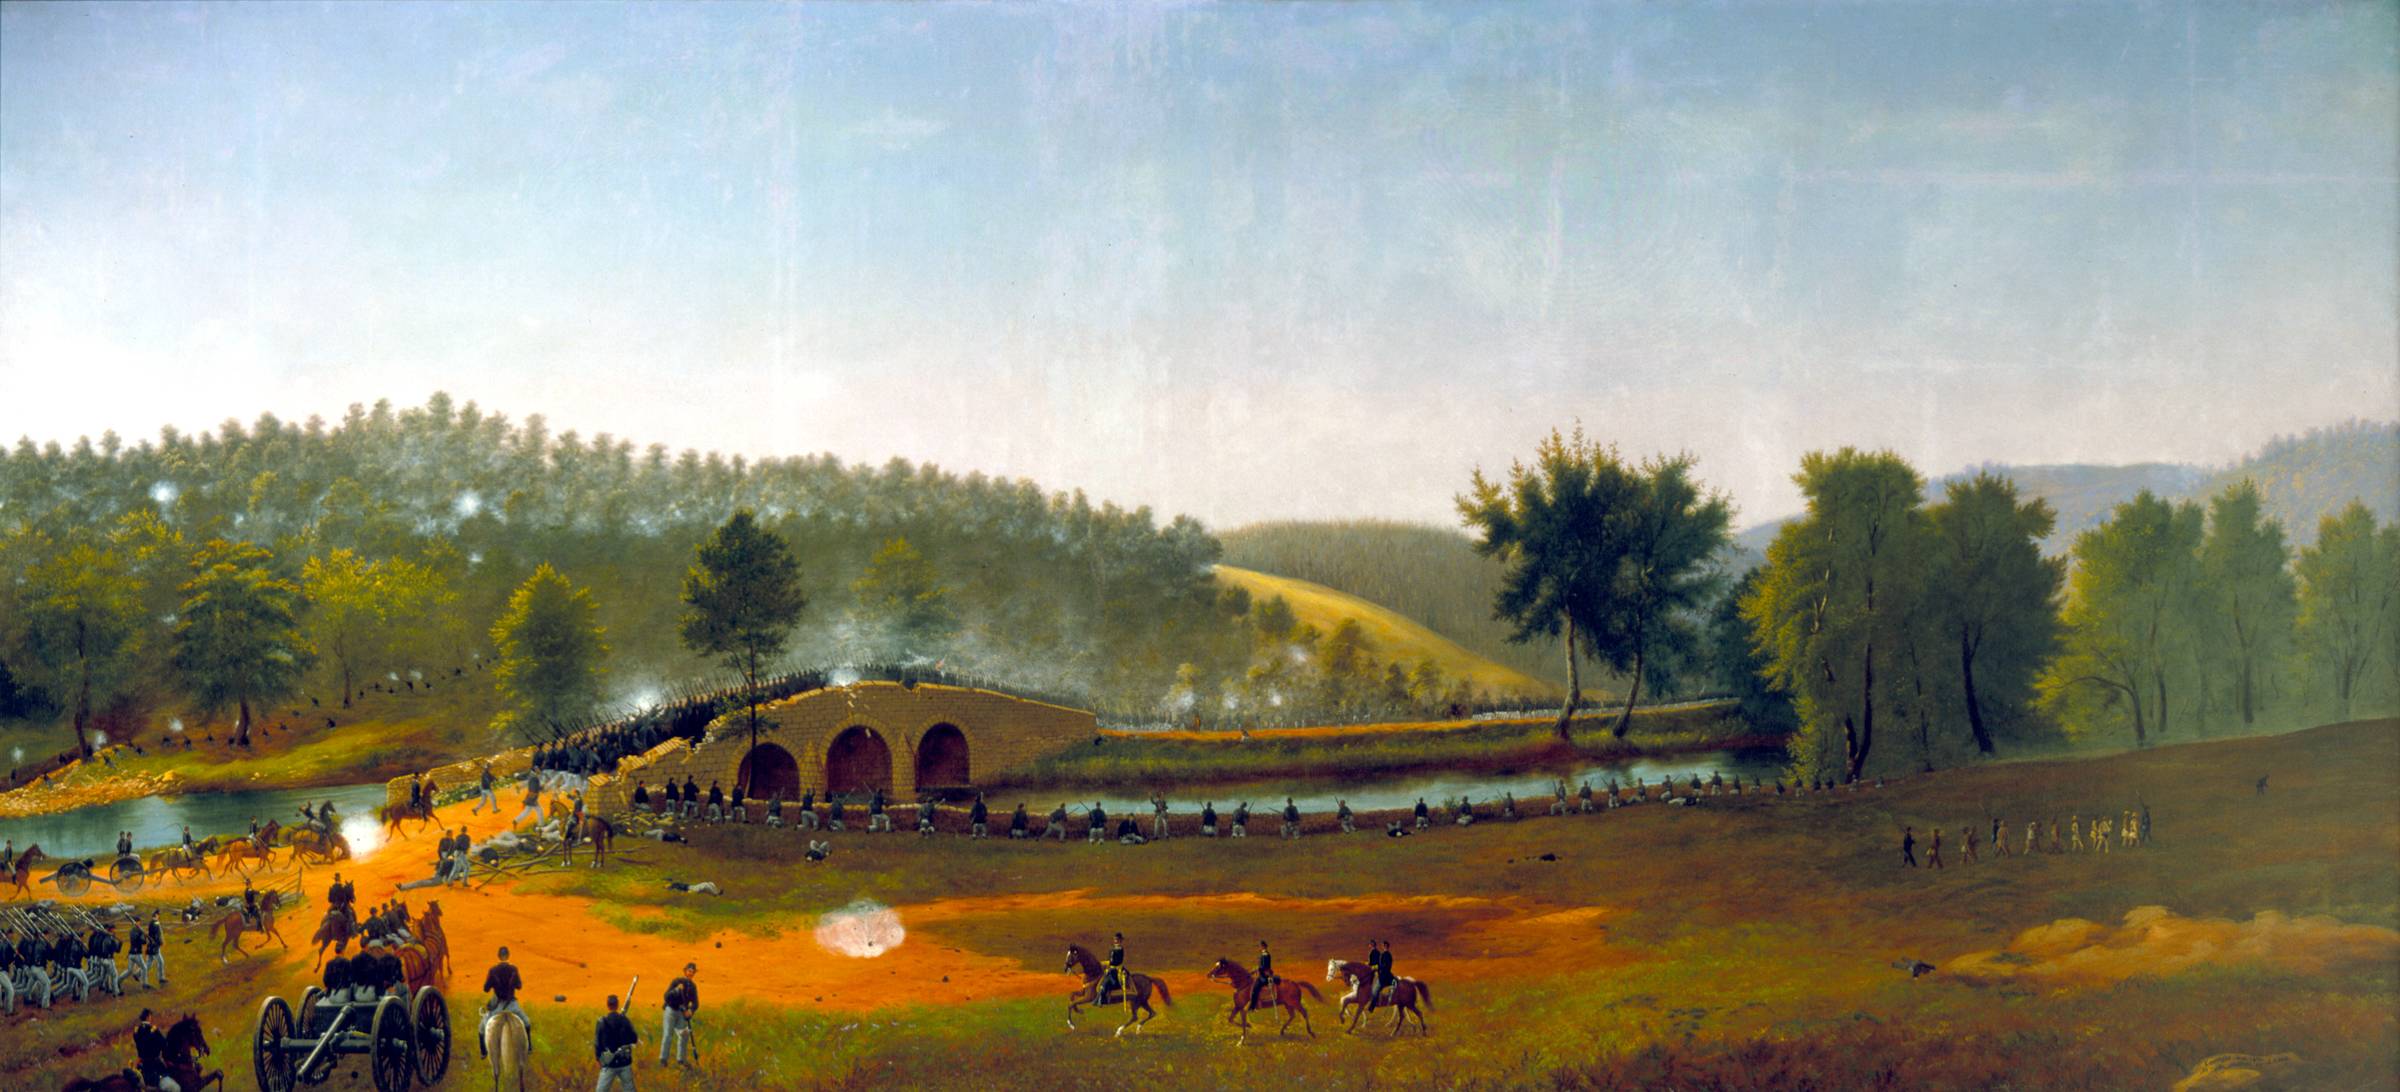 Early afternoon. Битва при Энтитеме 1862. Битва при Энтитеме 1862 картины. 17 Сентября 1862 сражение при Энтитеме Burnside Bridge. Battle of Antietam.